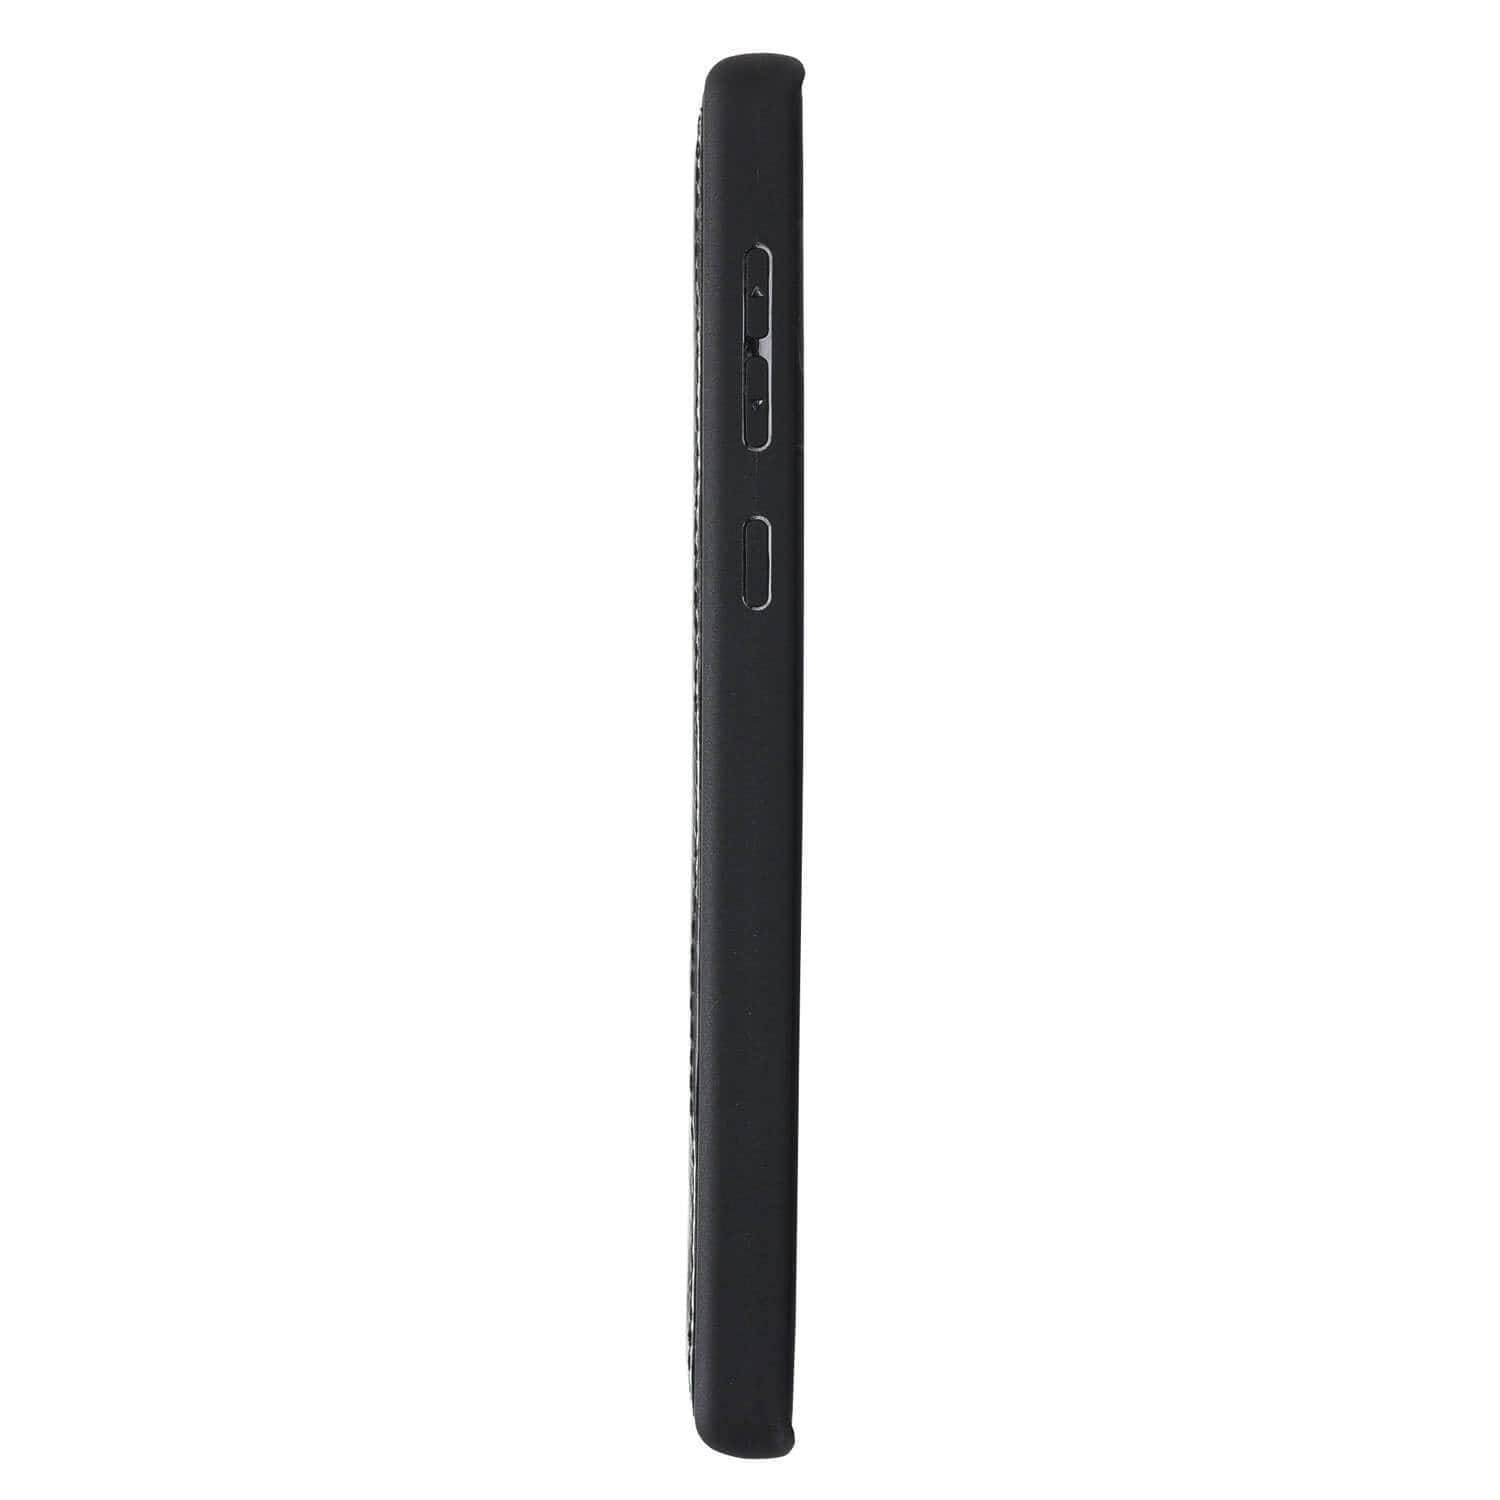 Phone Case Flex Cover Back Leather Case for Samsung Note 10 Plus - Rustic Black Bouletta Shop